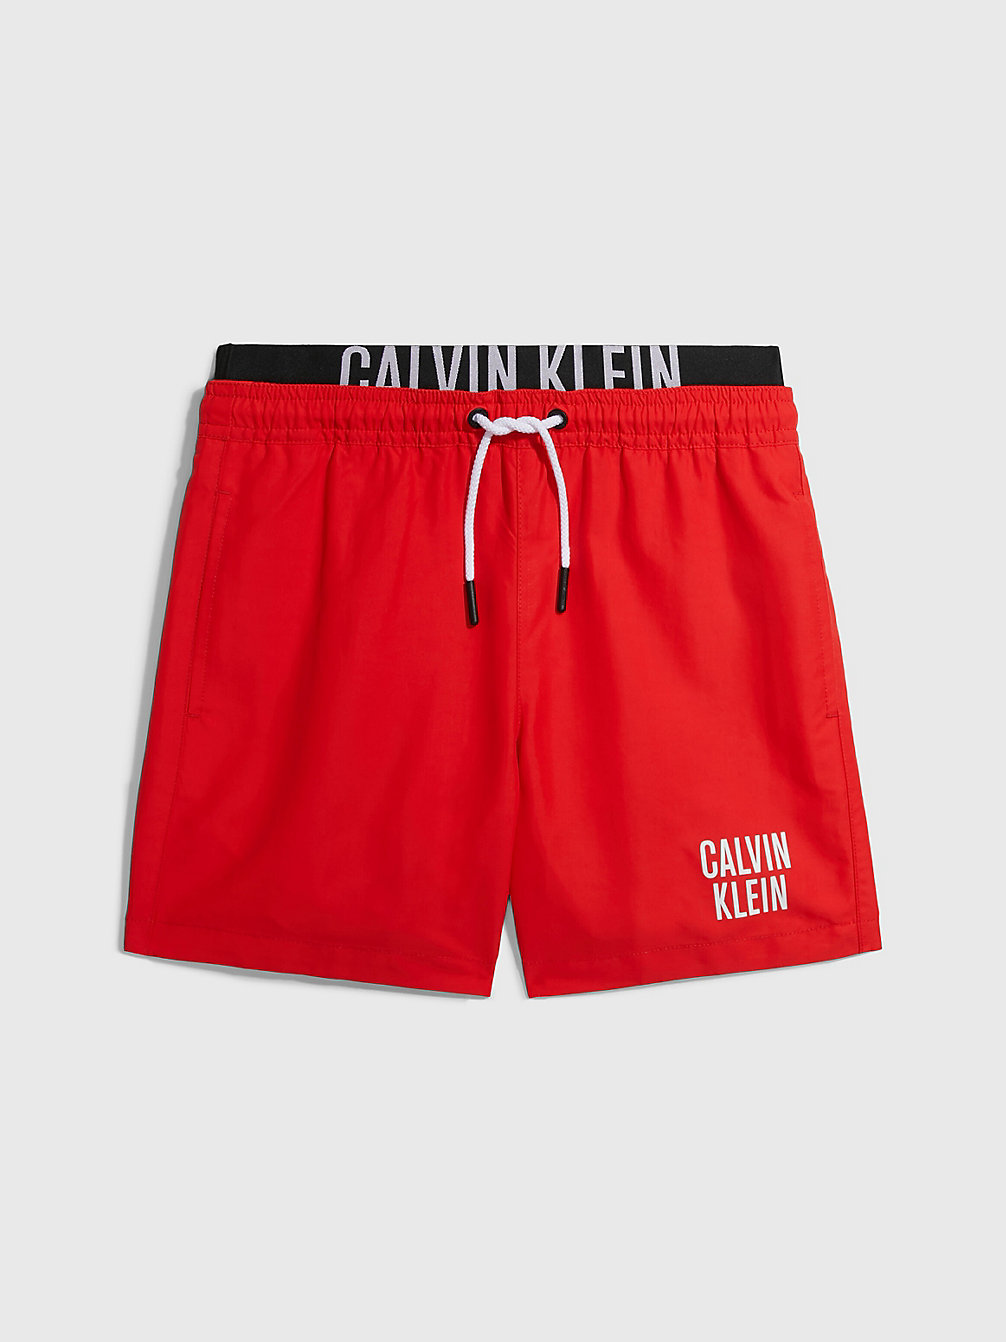 CAJUN RED > Jongenszwemshorts - Intense Power > undefined boys - Calvin Klein